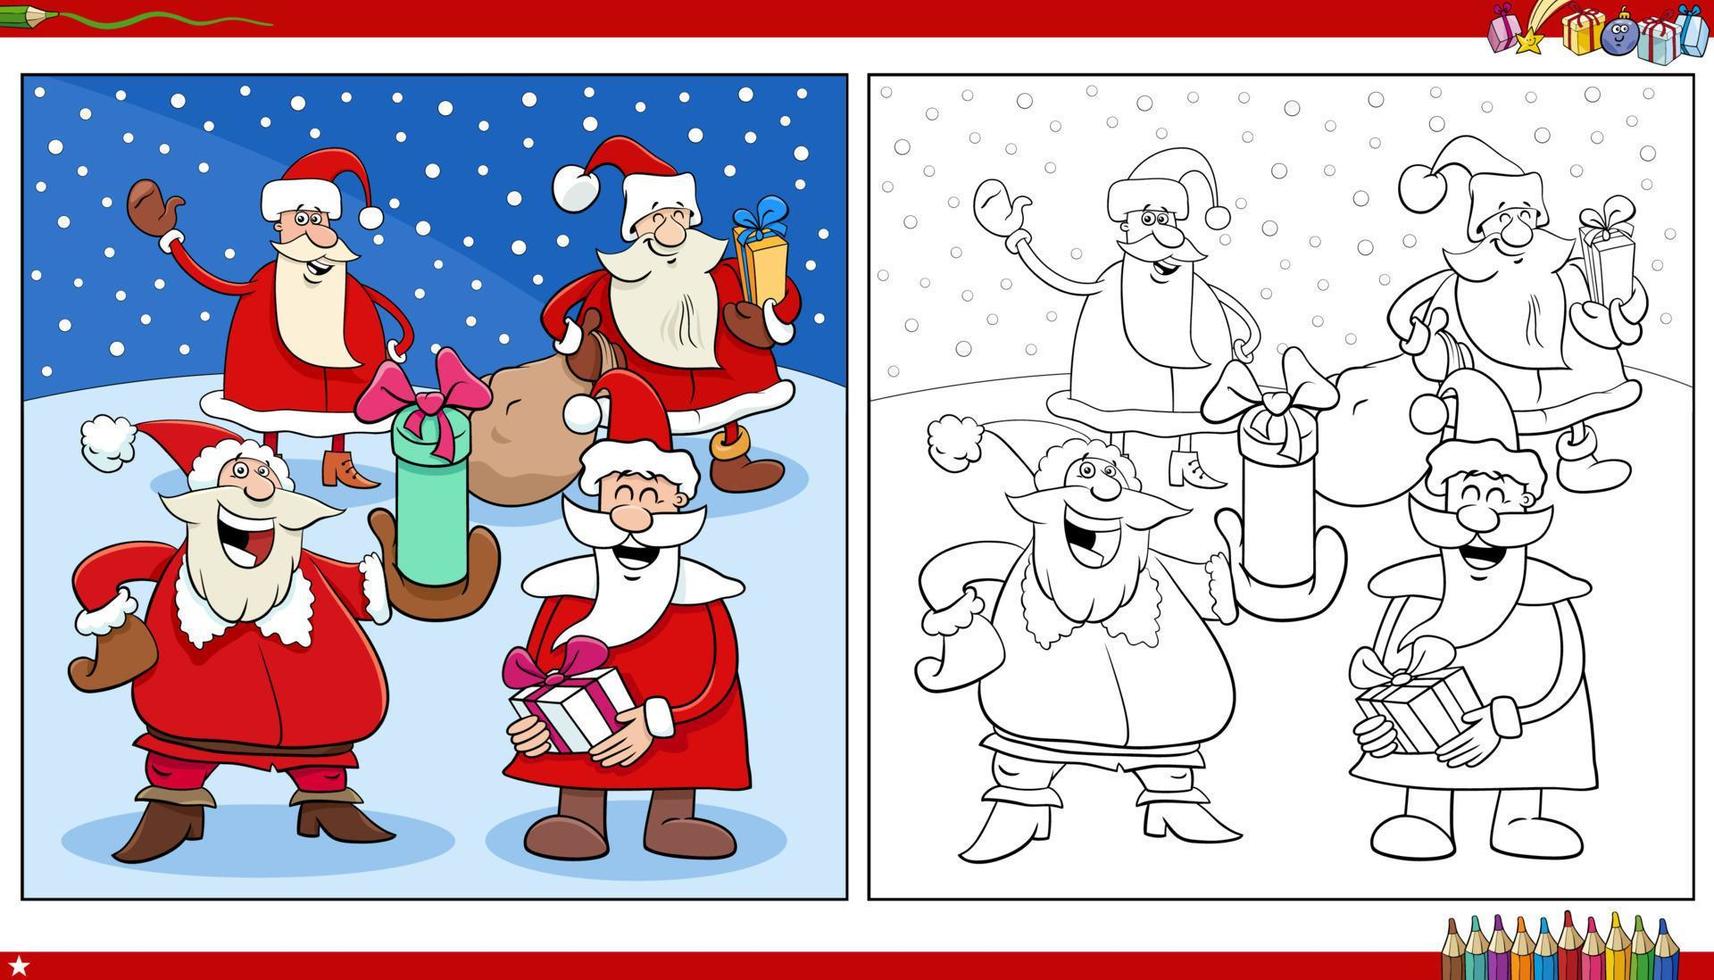 Santa Claus Christmas characters group coloring page vector